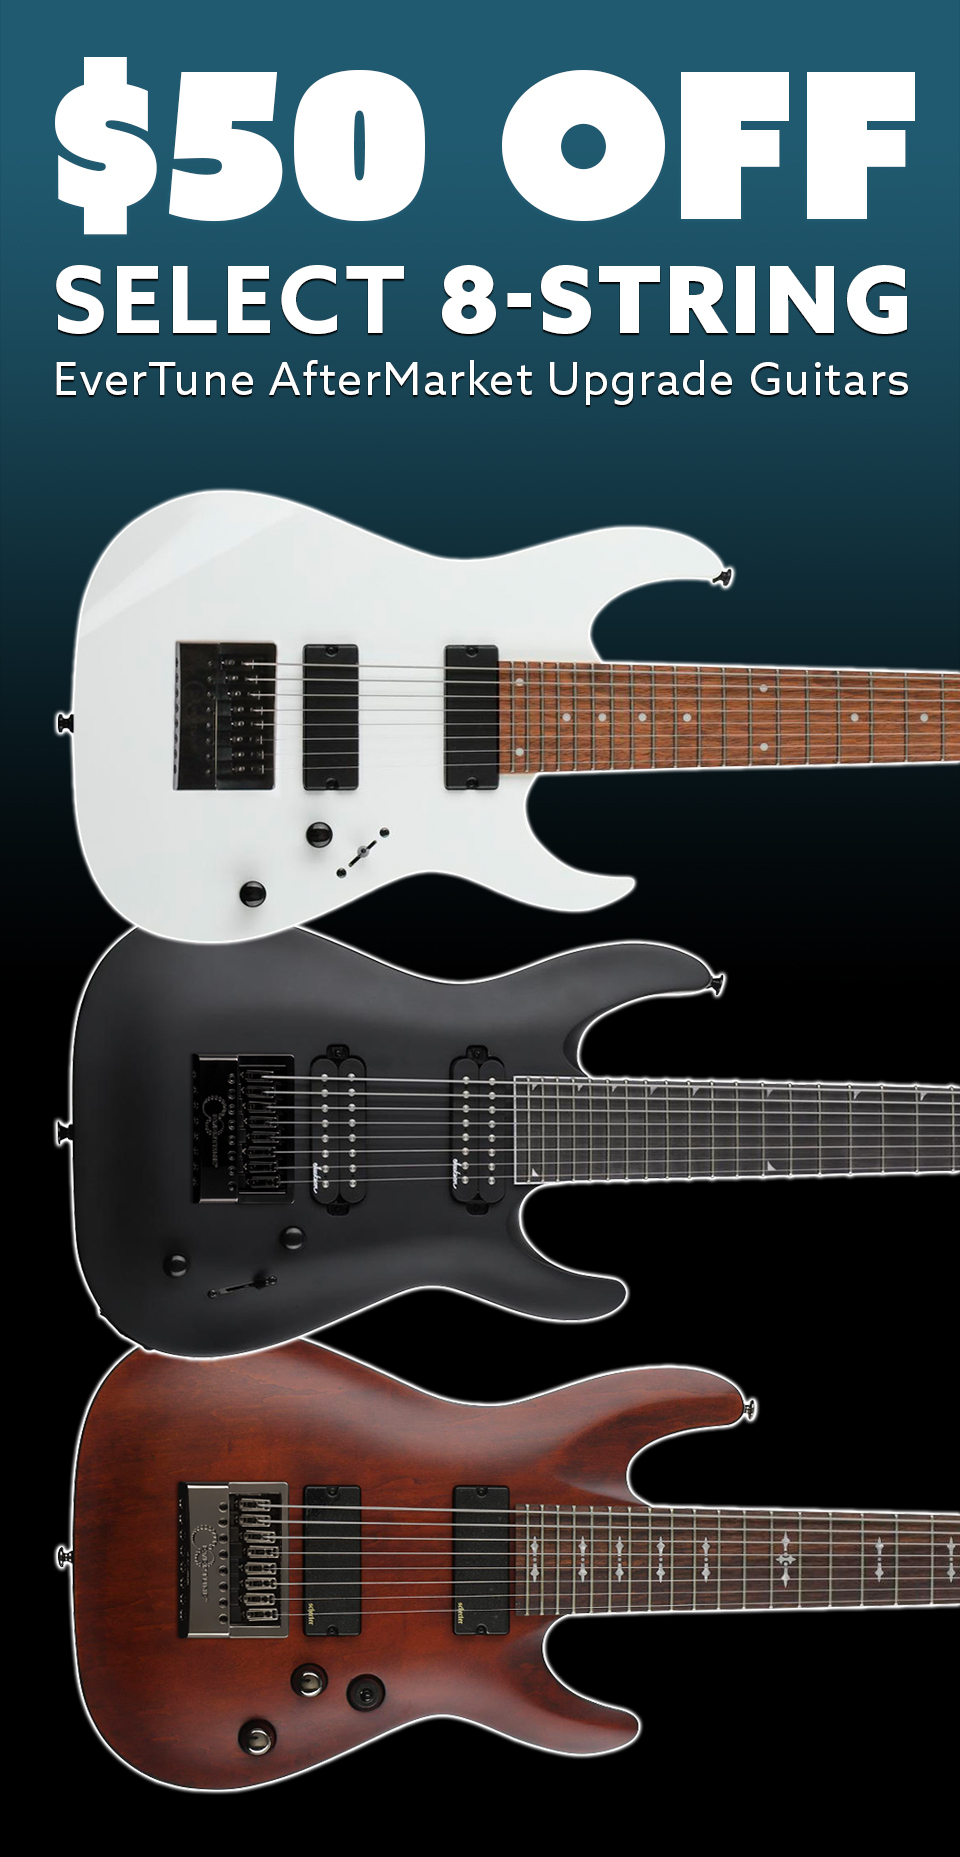 $50 OFF select 8-string EverTune AfterMarket Upgrade Guitars